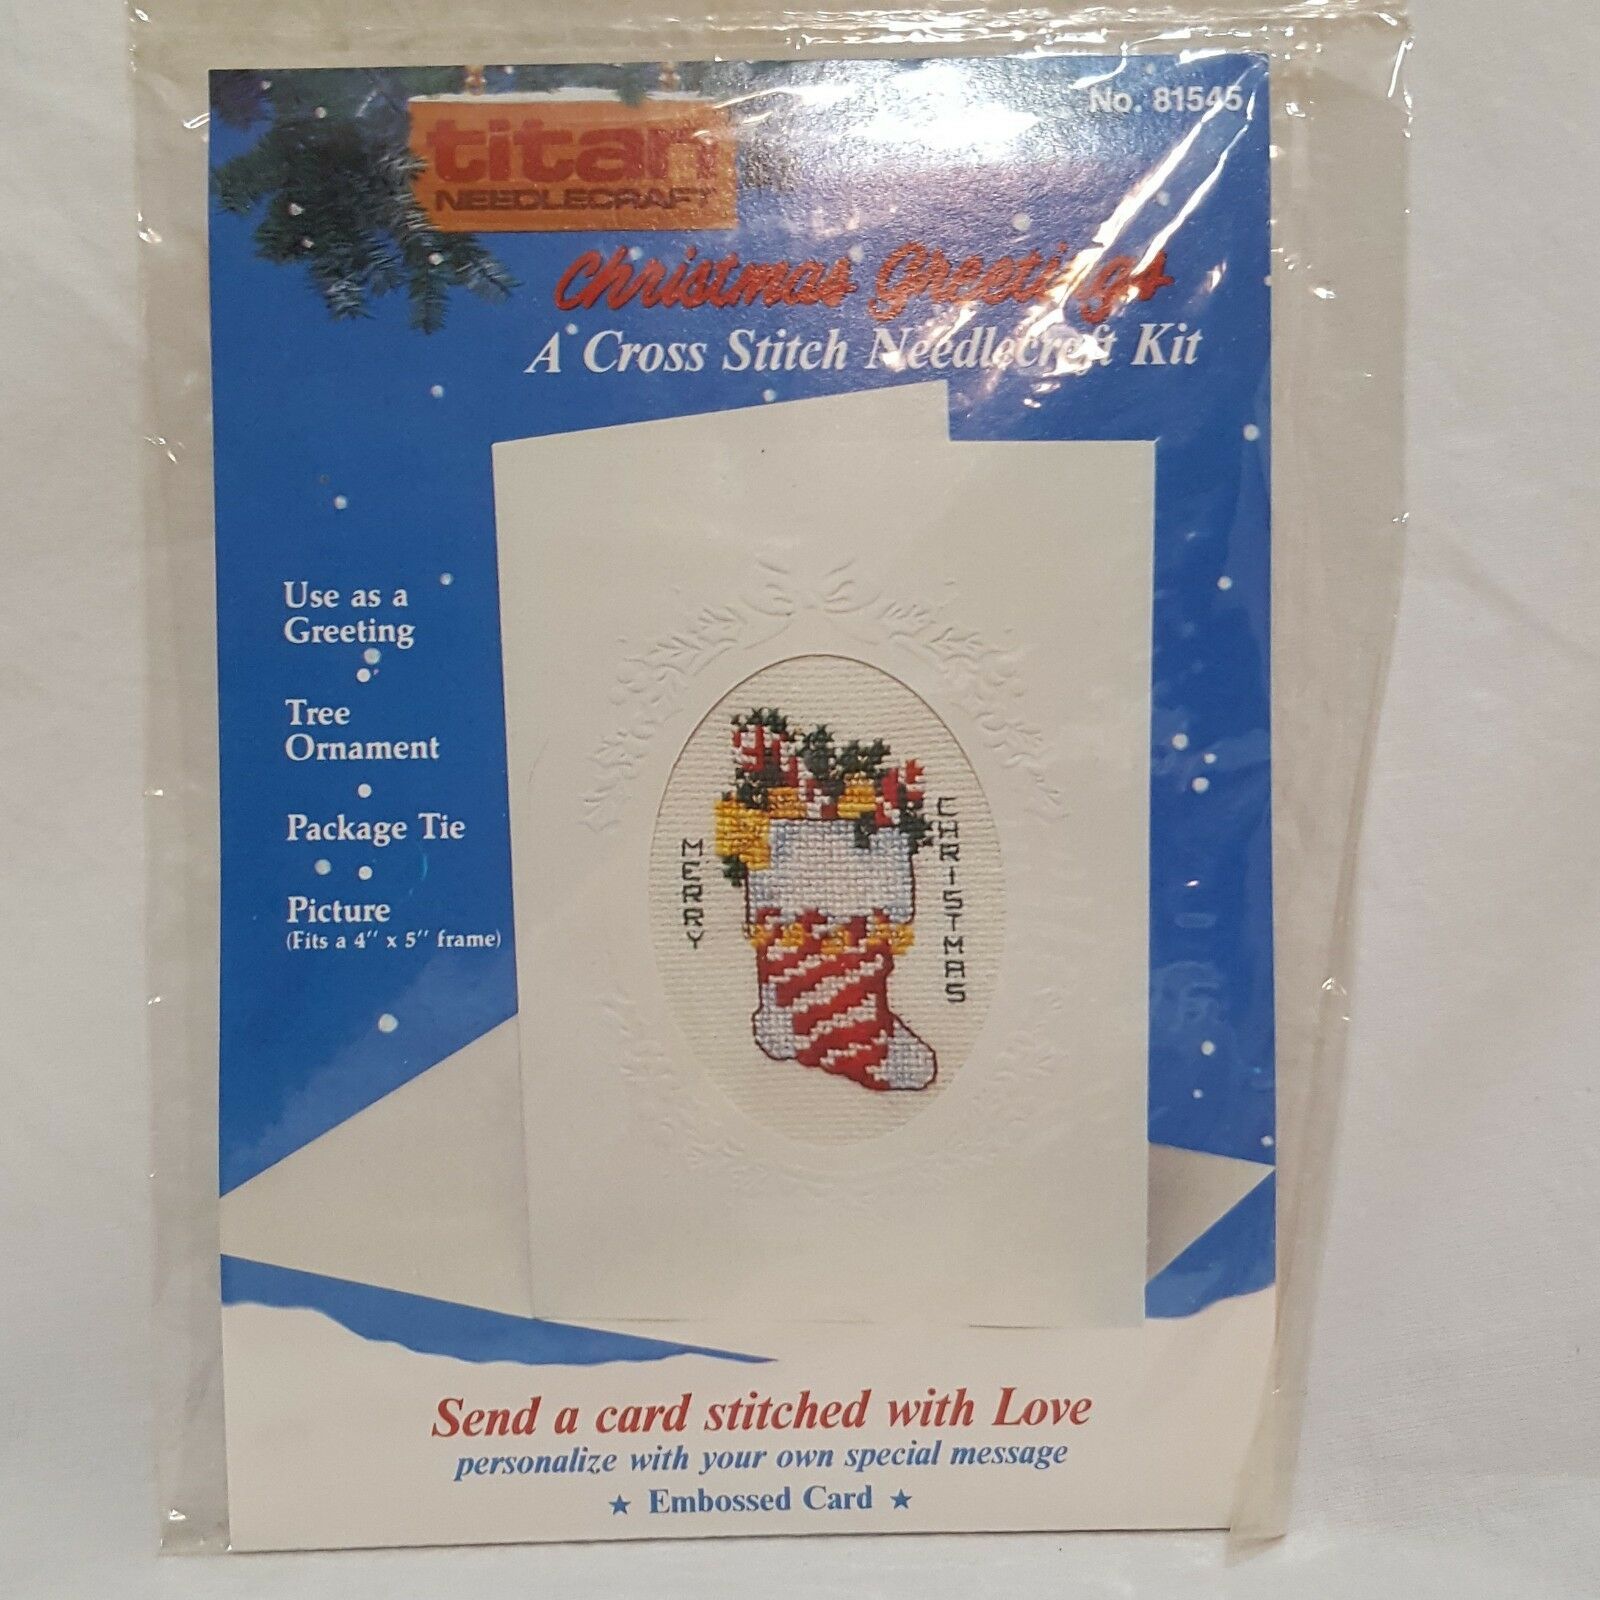 Christmas White Card Cross Stitch Kits 1988 Stocking Titan Needcraft Embossed - $8.23